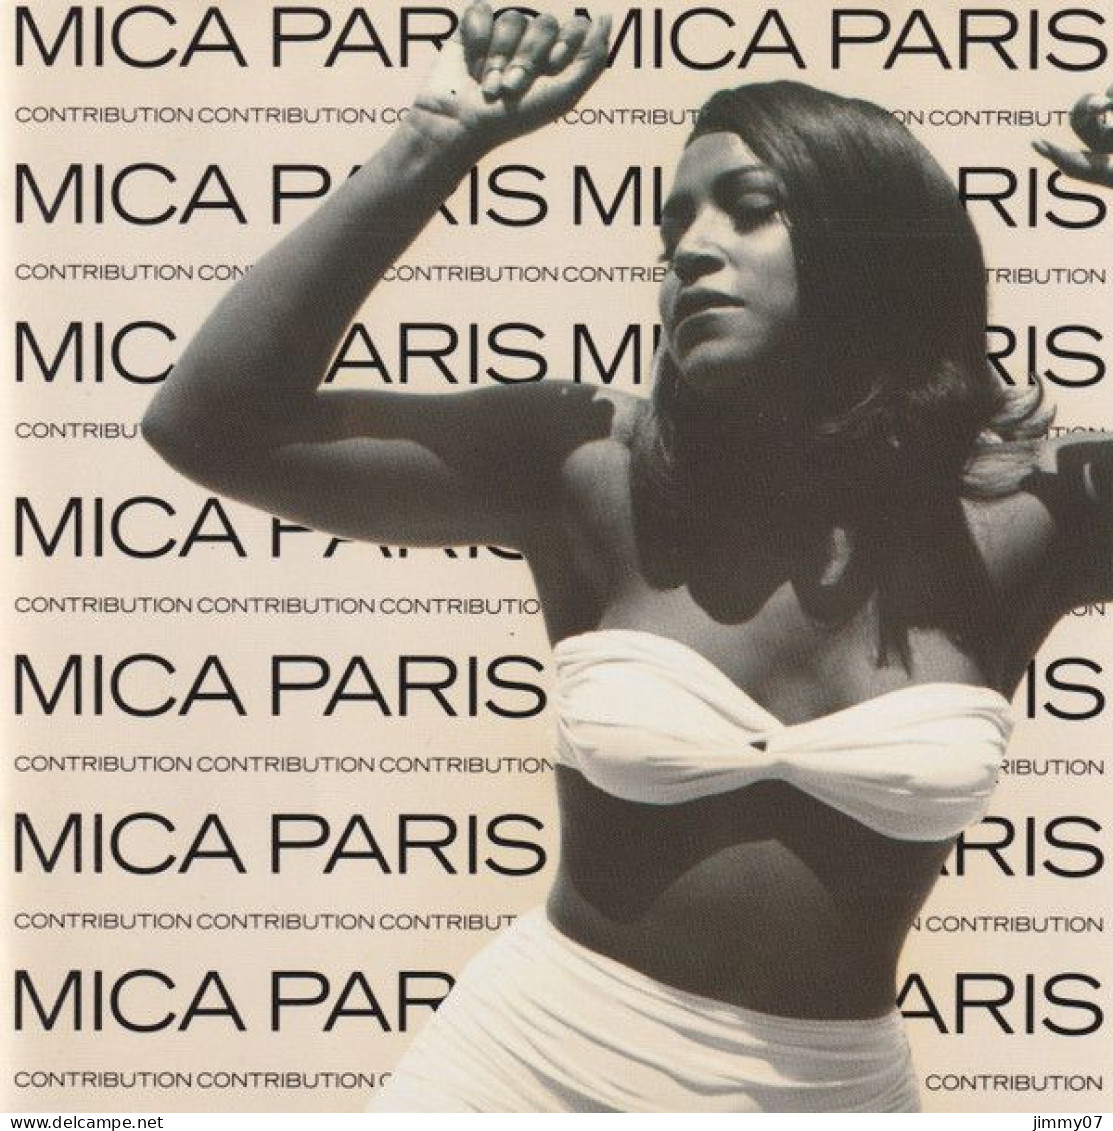 Mica Paris - Contribution (CD, Album) - Disco, Pop